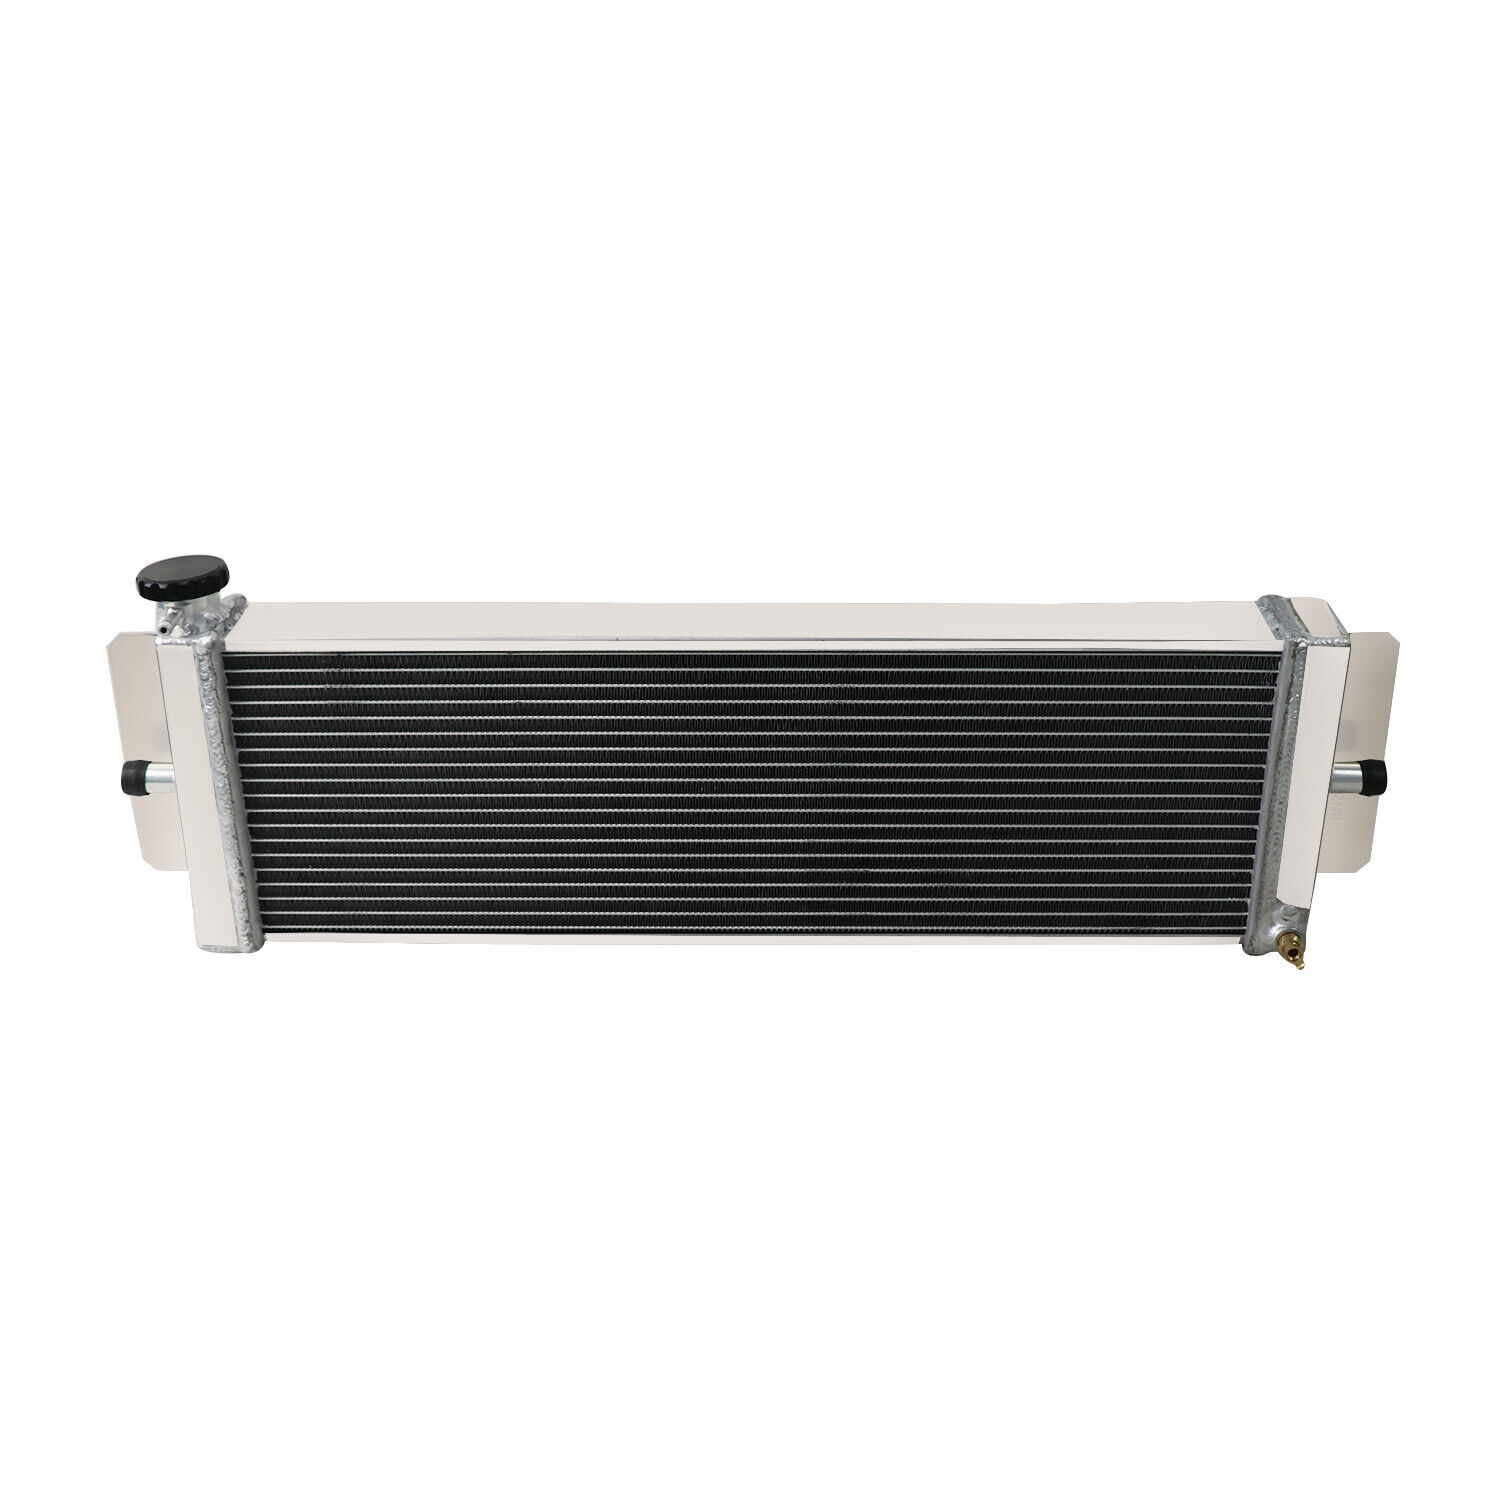 2 Row Air to Water Aluminum Intercooler Liquid Heat Exchanger Radiator Universal